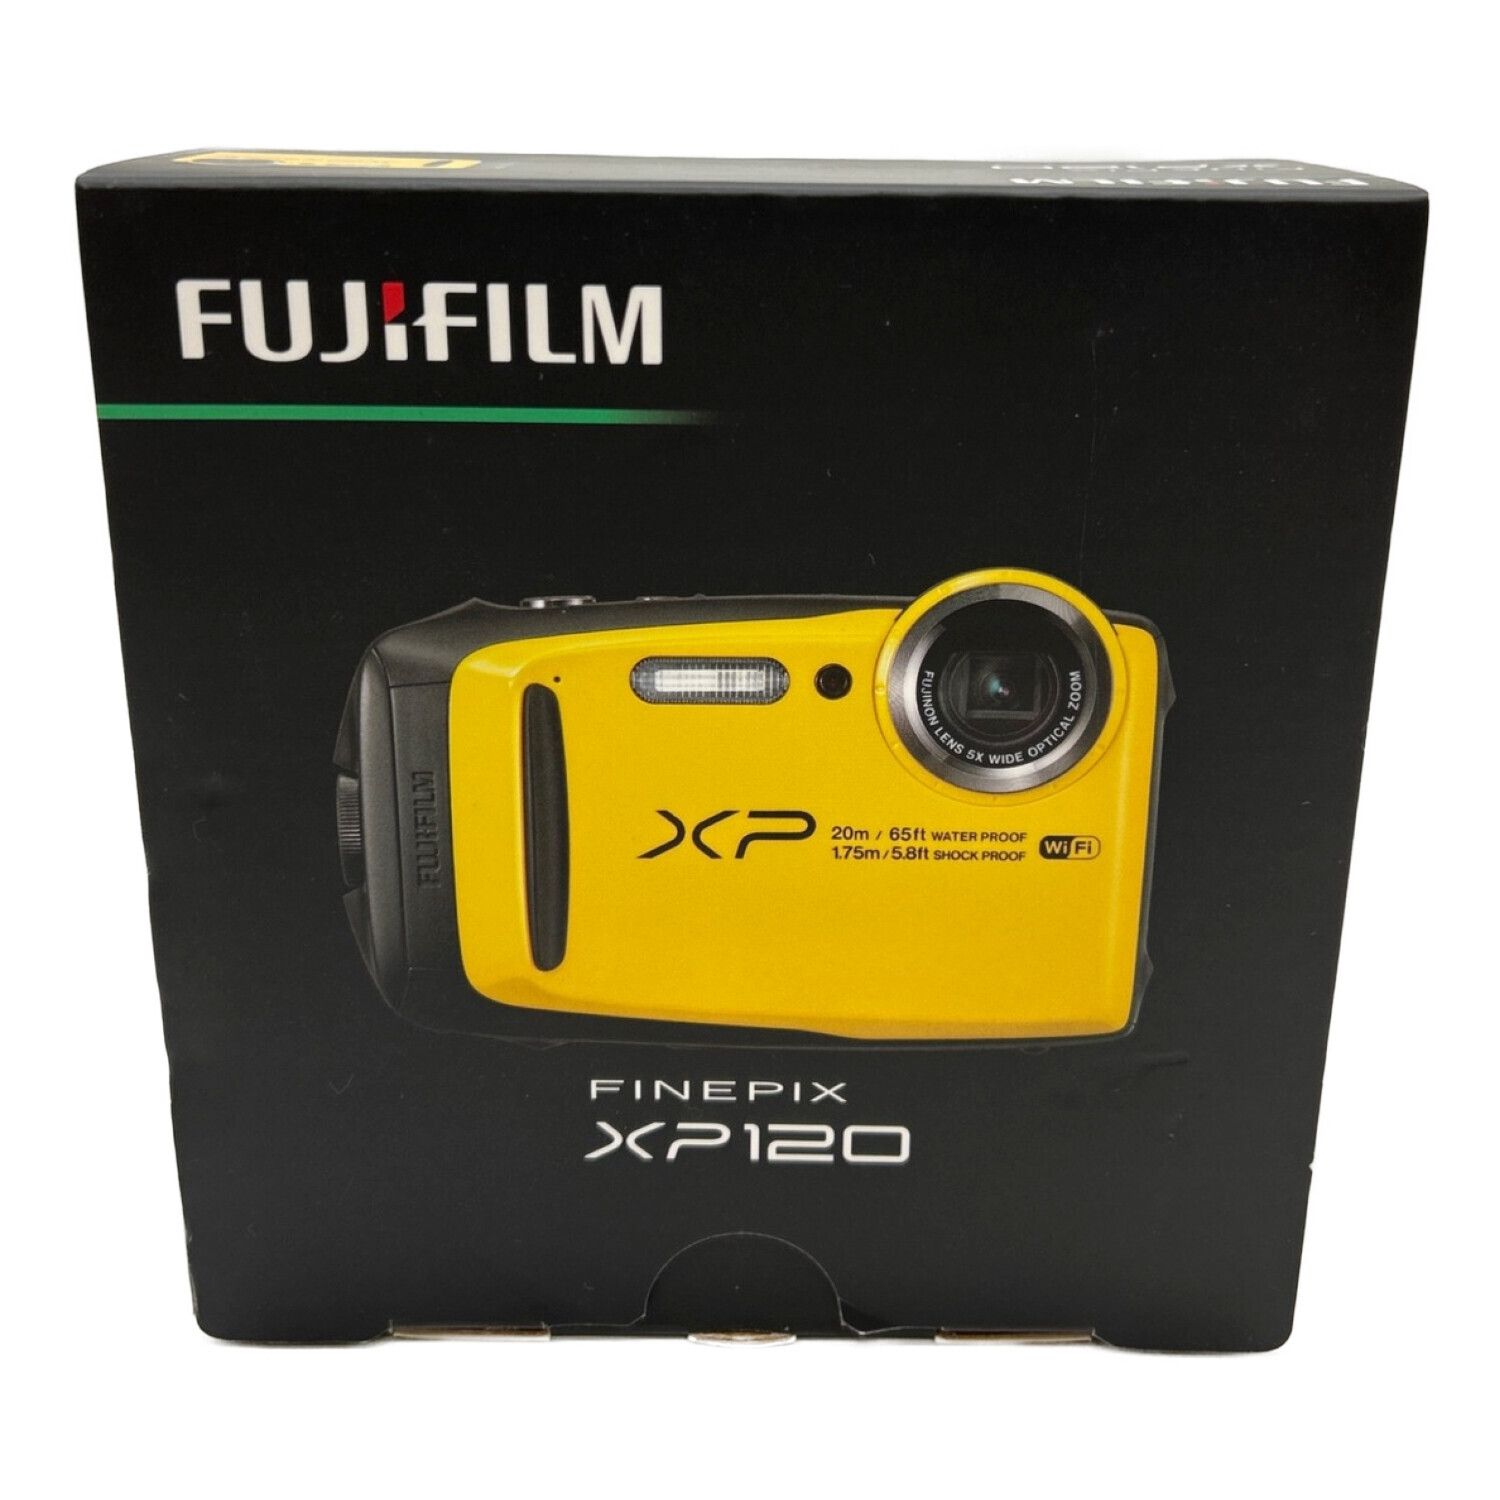 FUJIFILM (フジフィルム) デジタルカメラ イエロー FinePix XP120